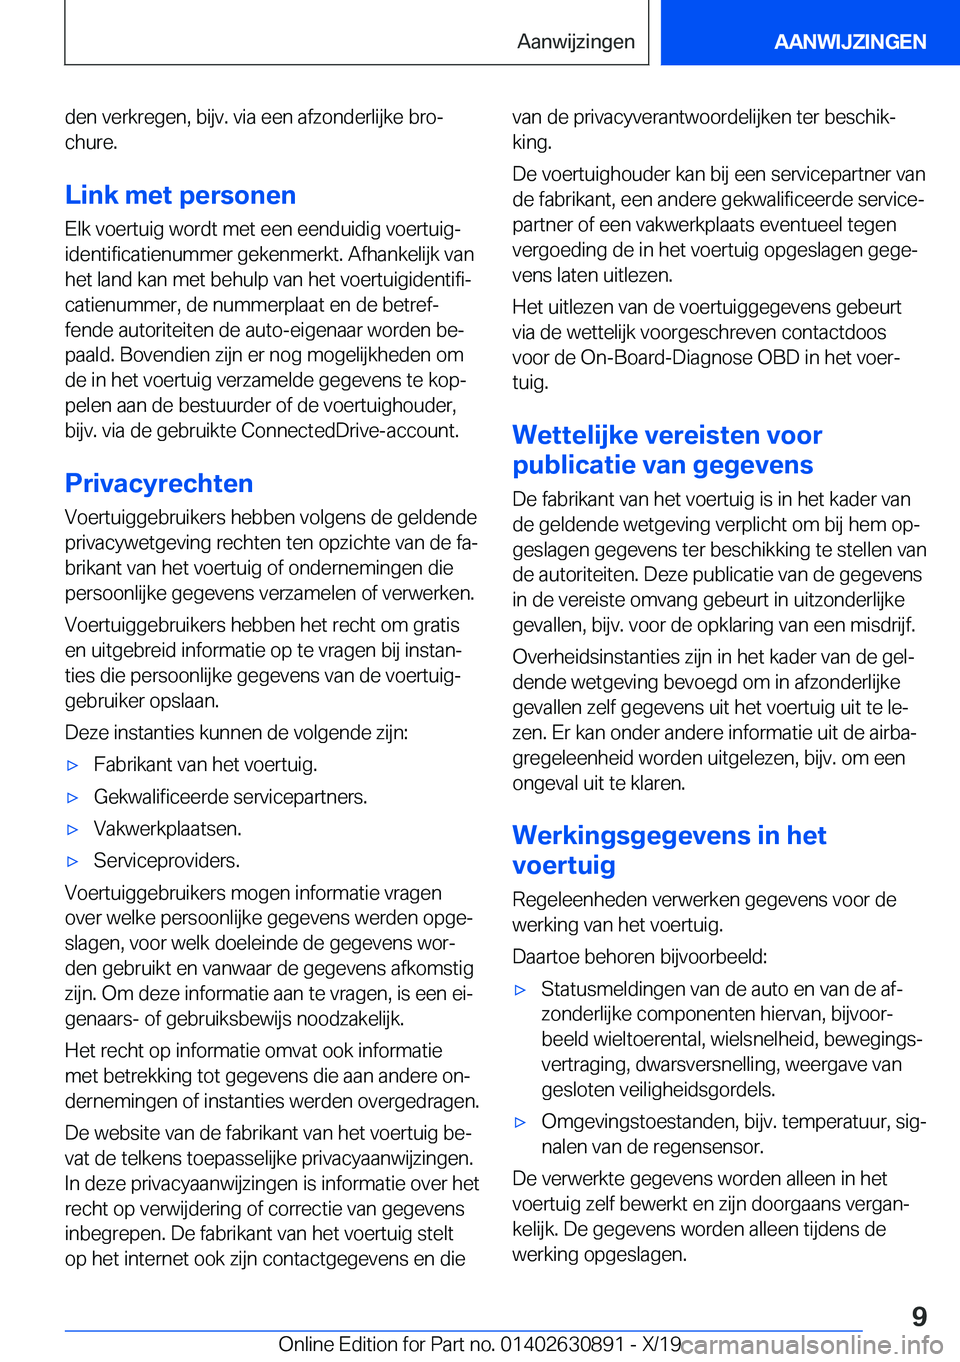 BMW X2 2020  Instructieboekjes (in Dutch) �d�e�n��v�e�r�k�r�e�g�e�n�,��b�i�j�v�.��v�i�a��e�e�n��a�f�z�o�n�d�e�r�l�i�j�k�e��b�r�oj
�c�h�u�r�e�.
�L�i�n�k��m�e�t��p�e�r�s�o�n�e�n�E�l�k��v�o�e�r�t�u�i�g��w�o�r�d�t��m�e�t��e�e�n��e�e